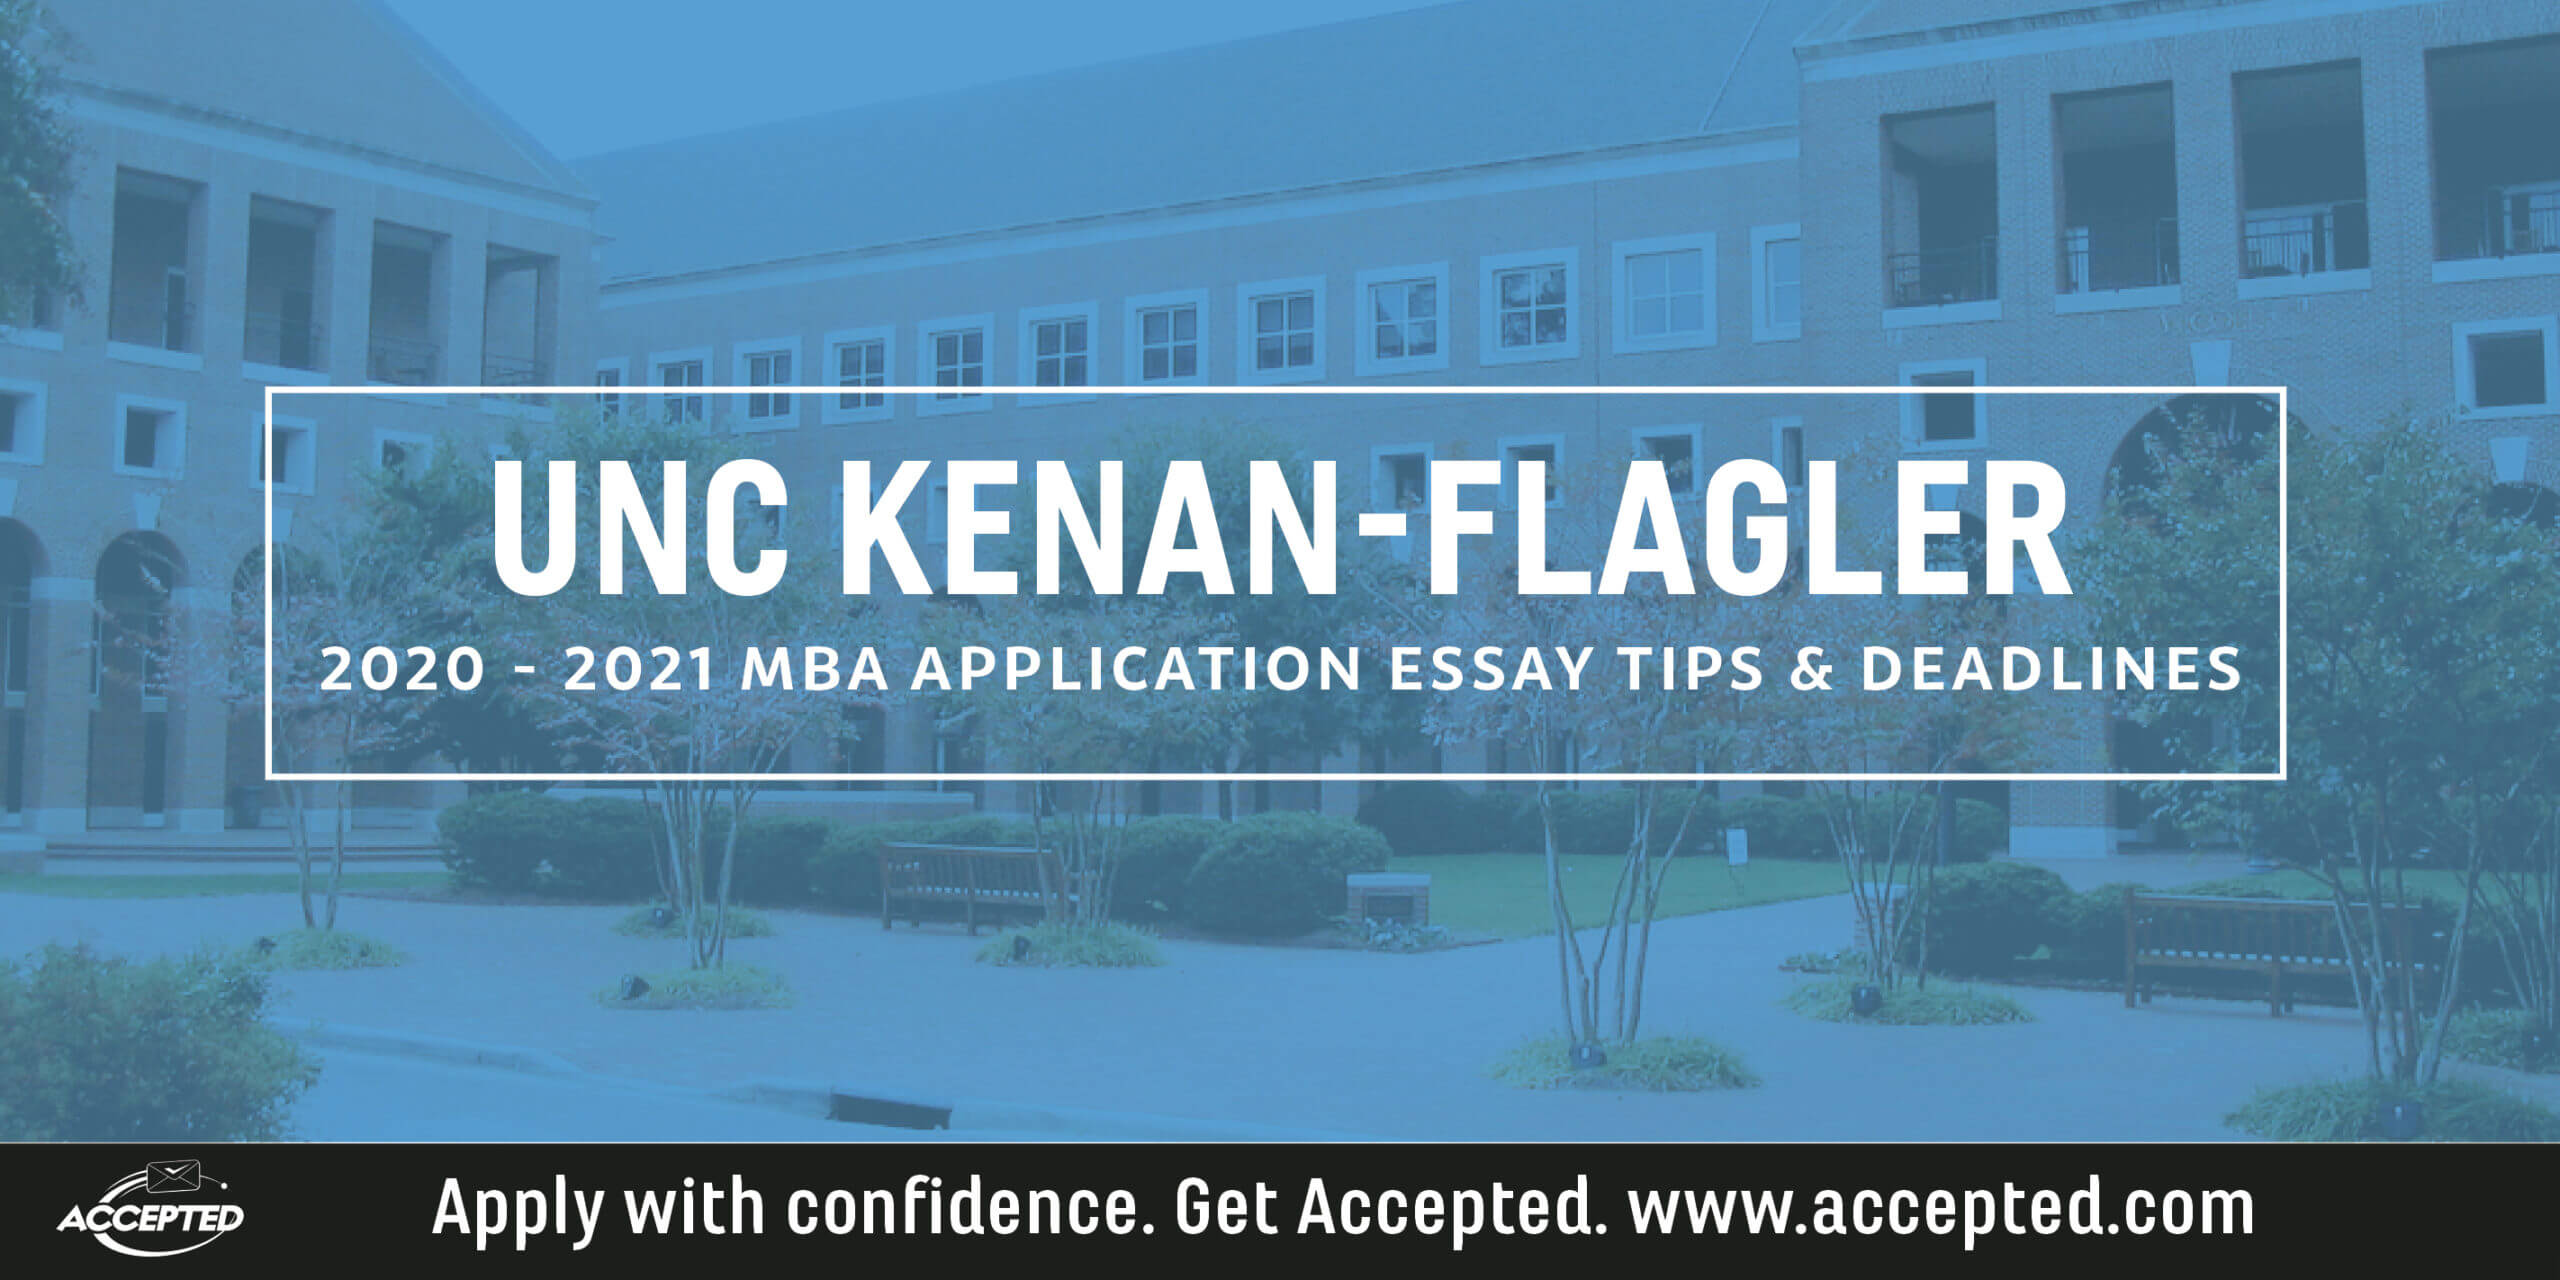 unc-kenan-flagler-mba-essay-tips-deadlines-2020-2021-accepted